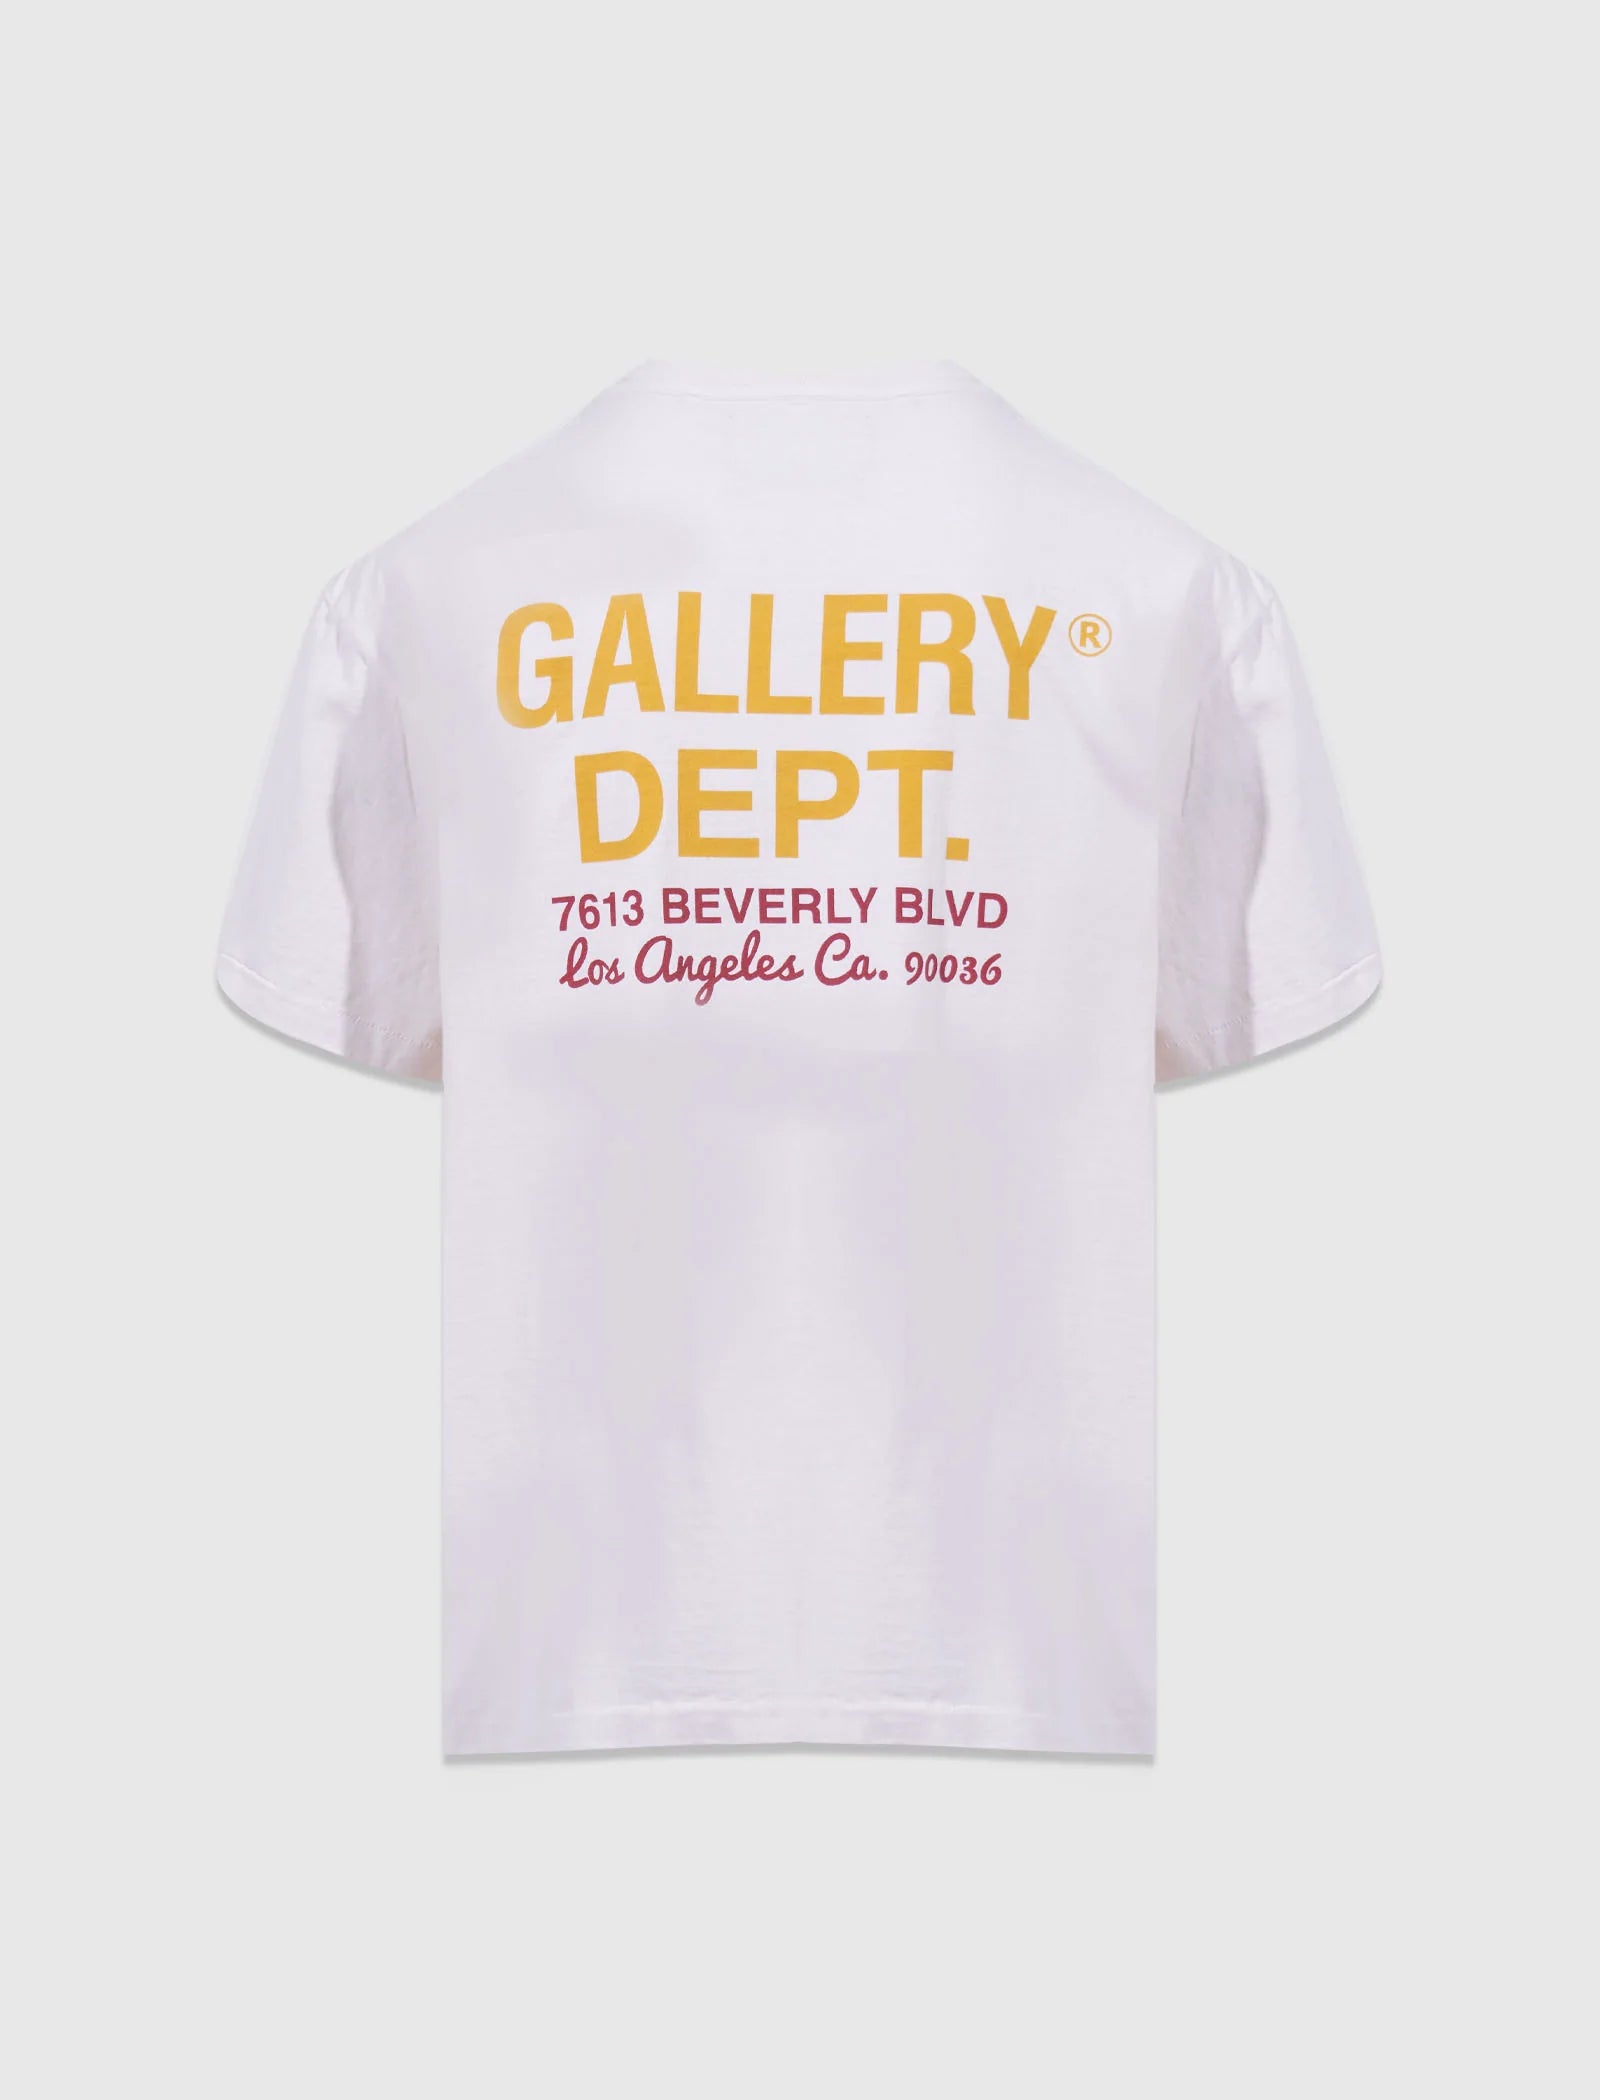 Gallery Dept. Venice Car Show T-Shirt - Ritzy Stylez